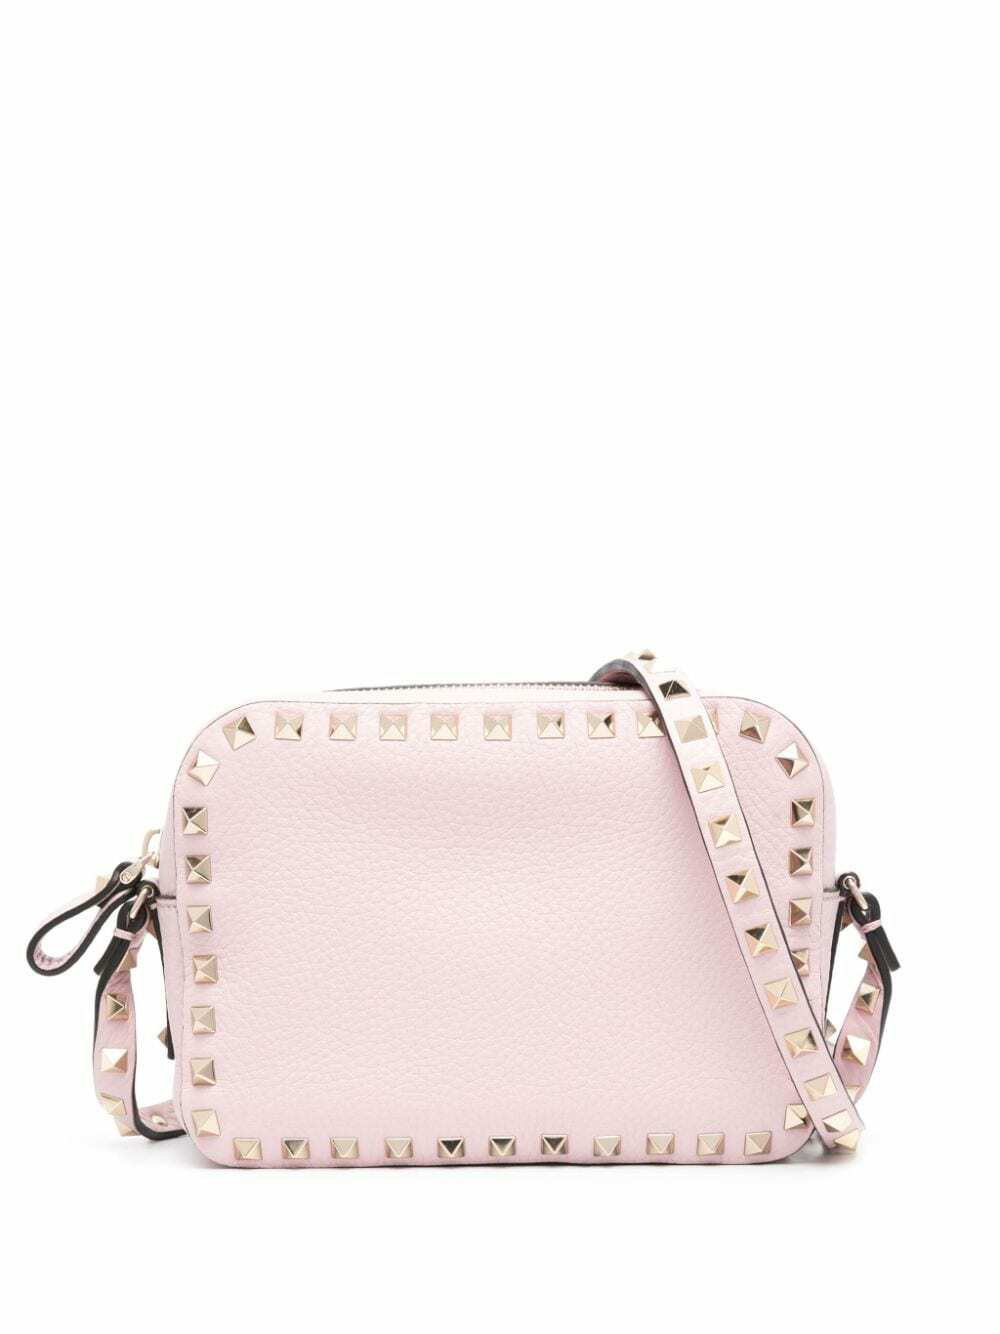 Rockstud 23 Small Leather Shoulder Bag in Pink - Valentino Garavani